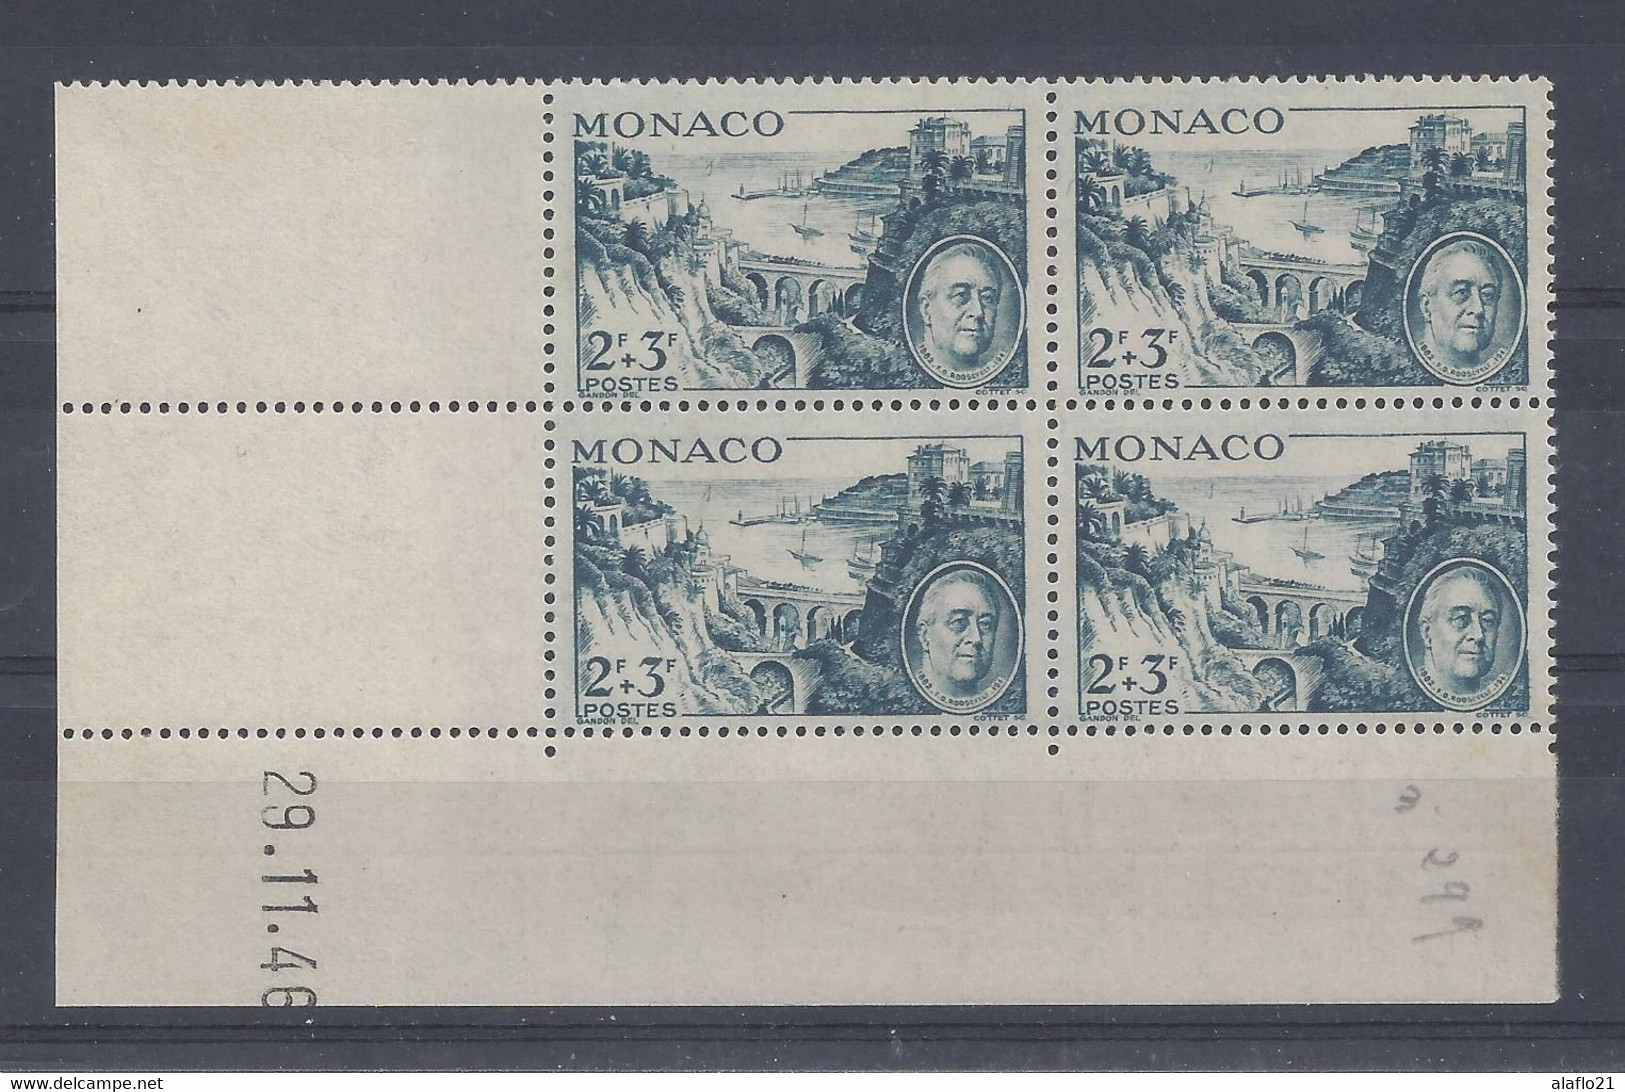 MONACO - N° 299 - HOMMAGE PRESIDENT ROOSEVELT - Bloc De 4 COIN DATE - NEUF SANS CHARNIERE - 29/11/46 - Unused Stamps